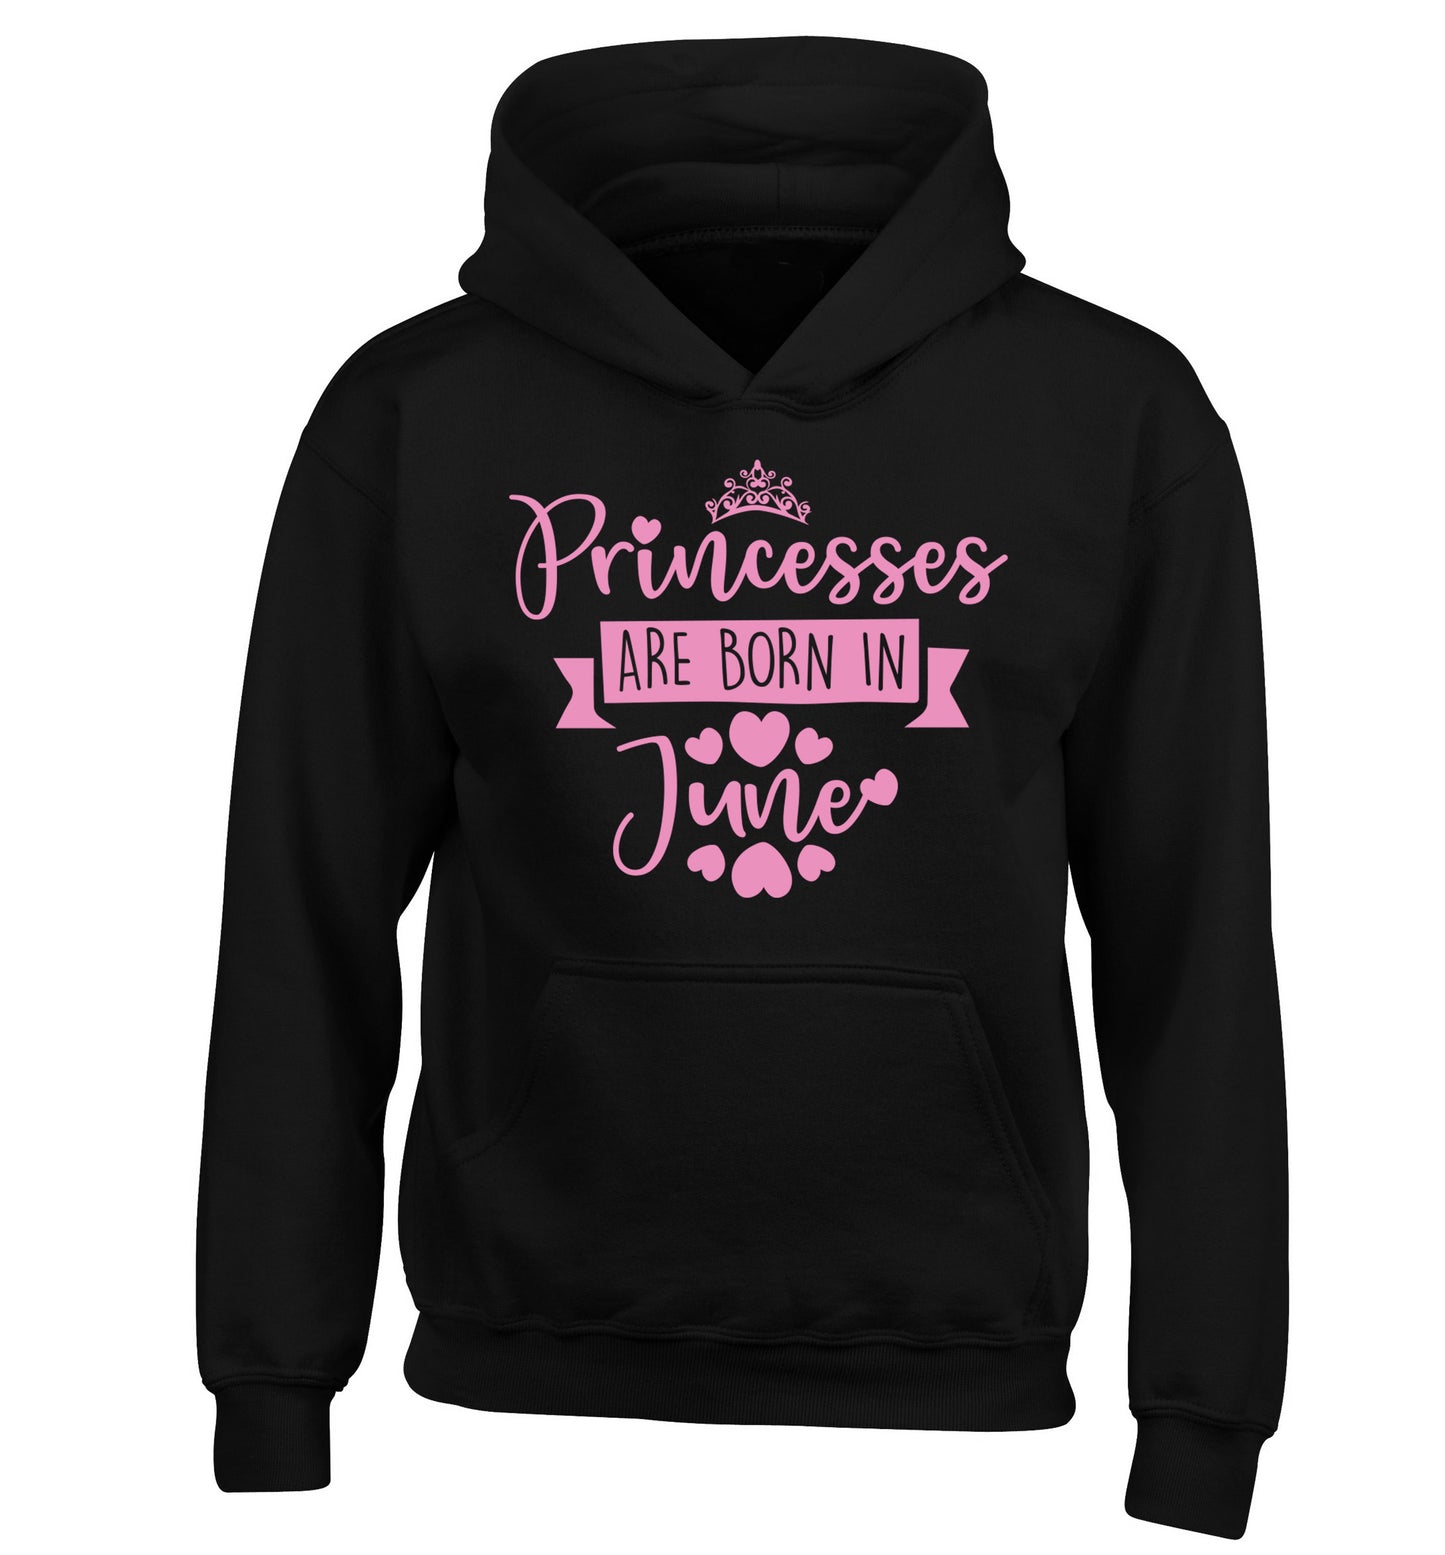 Princesses are born in June children's black hoodie 12-13 Years